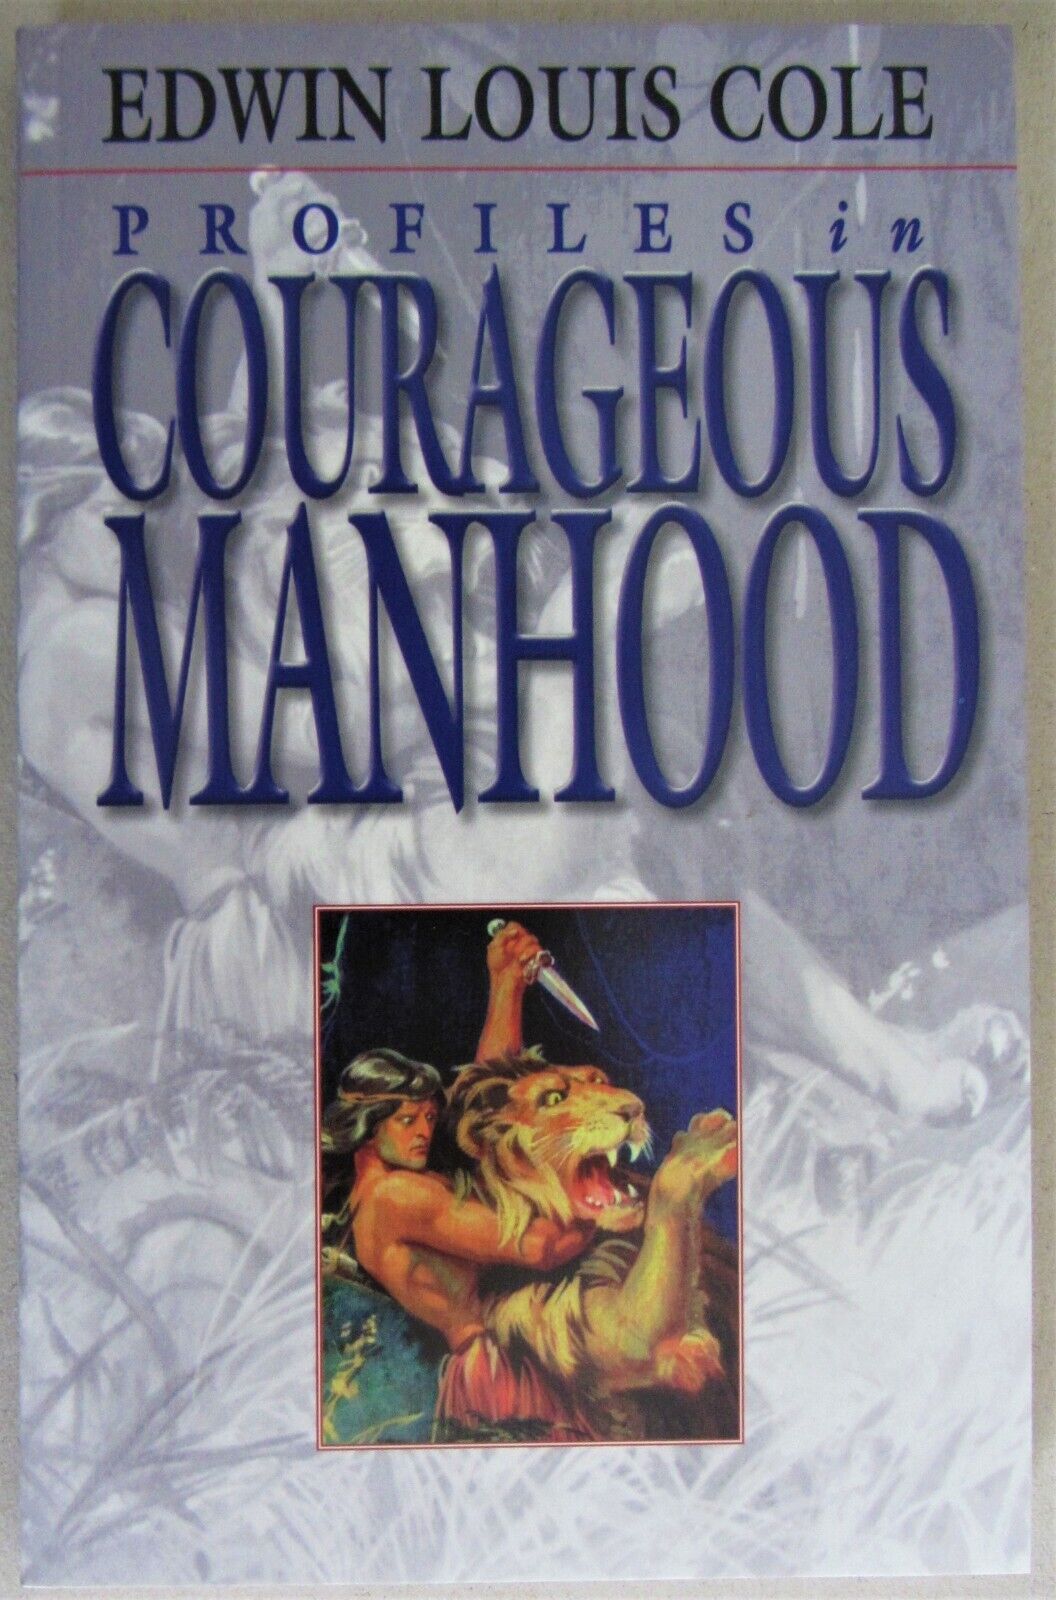 PROFILES IN COURAGEOUS MANHOOD~EDWIN LOUIS COLE~1998~PB~TARZAN COVER ILLO~NEW